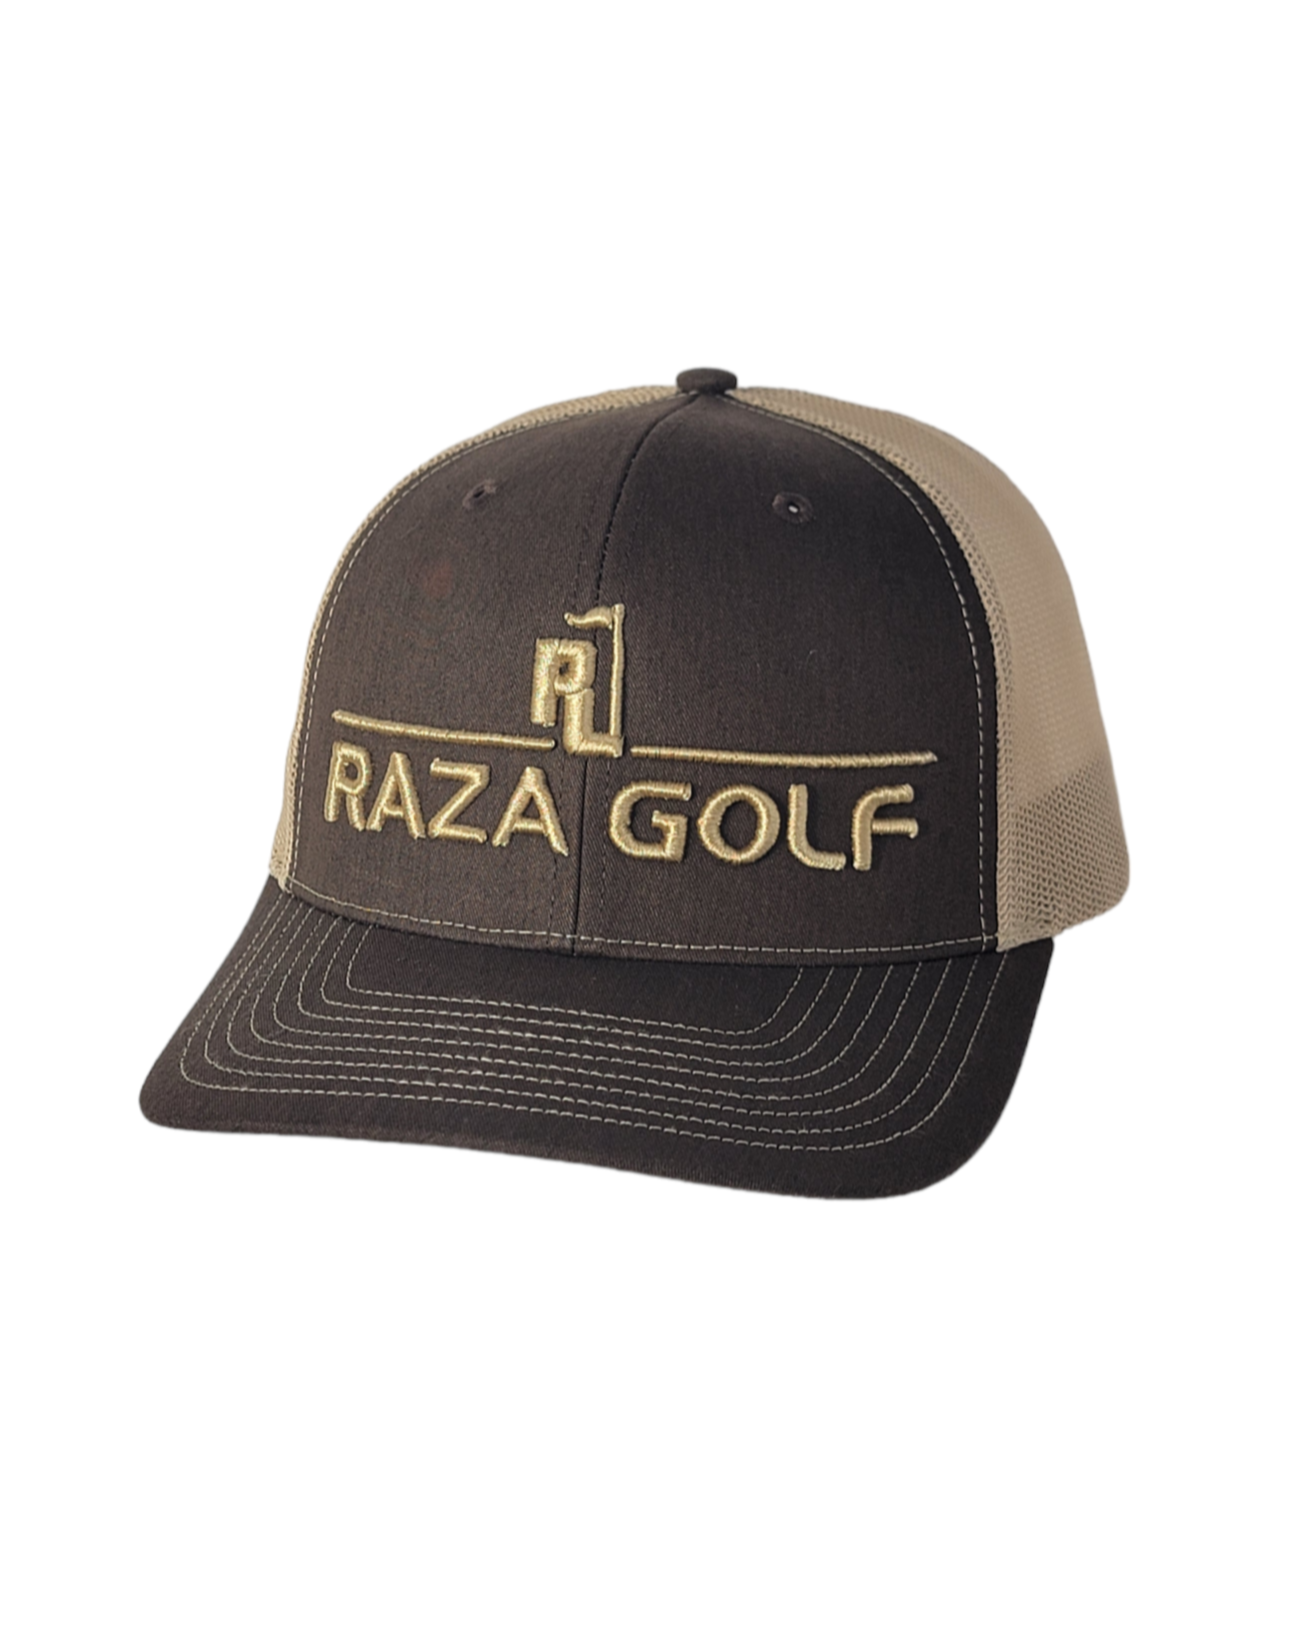 Raza Golf Brown/Khaki Linear Trucker Hat